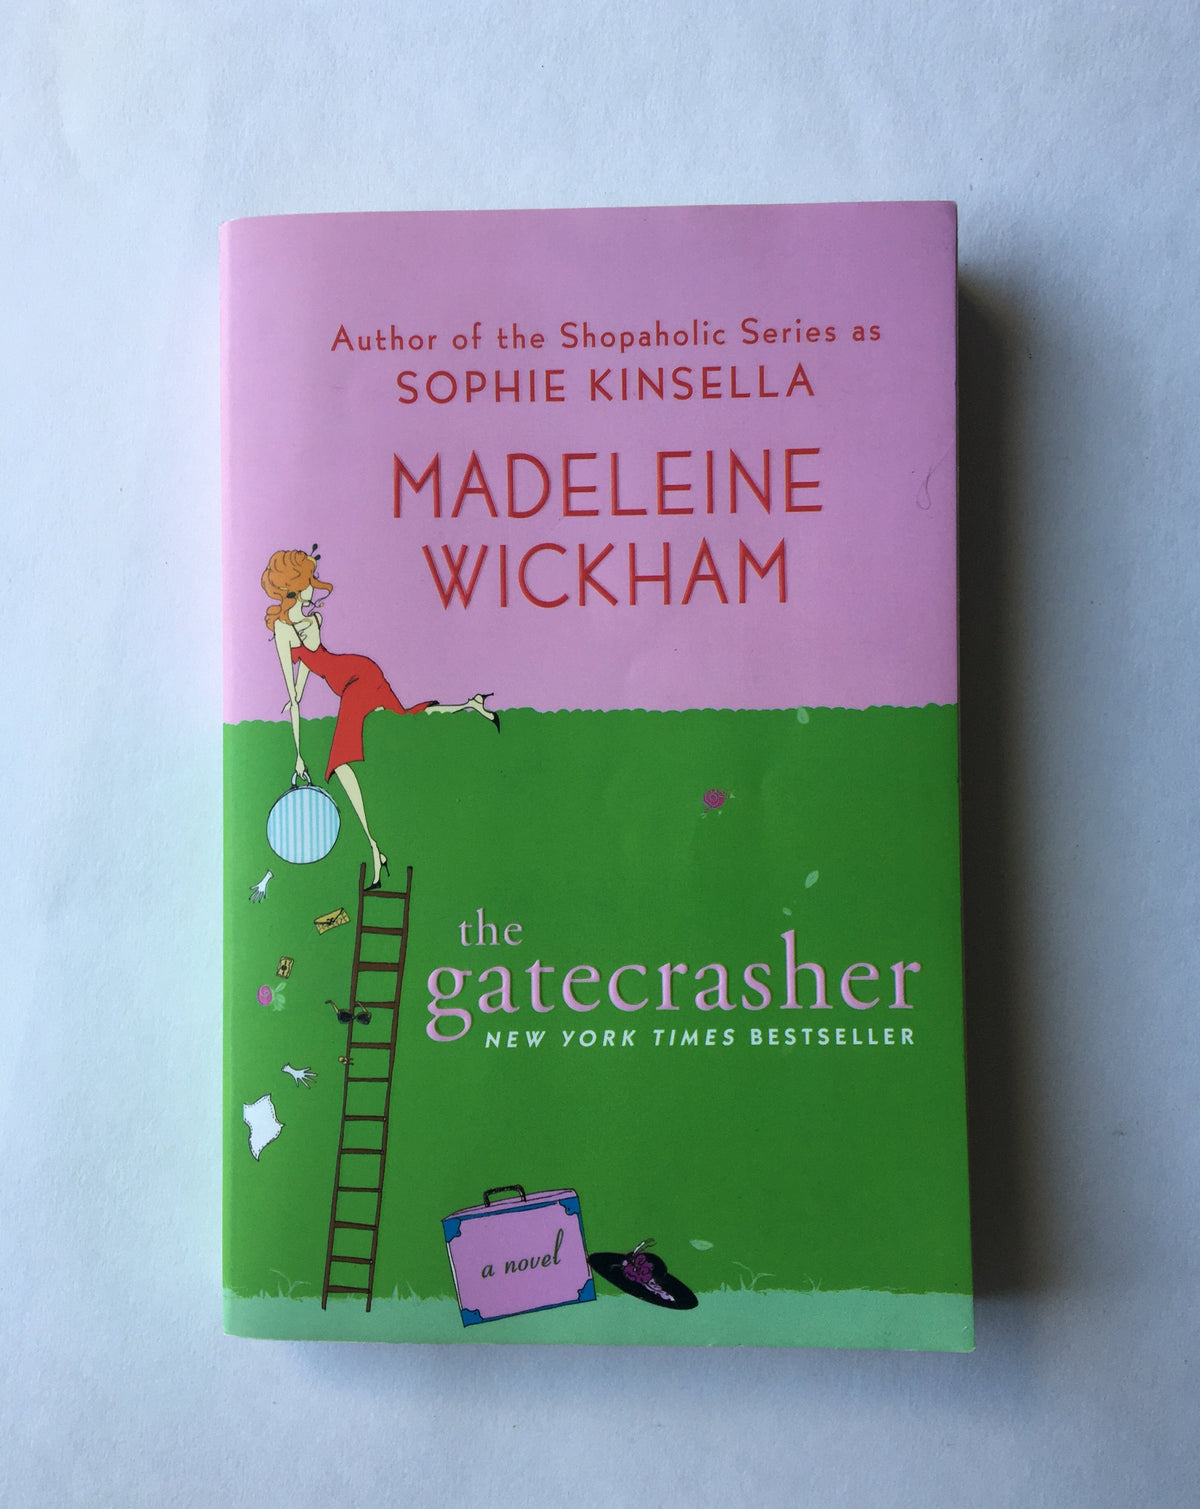 The Gatecrasher by Madeleine Wickham (aka Sophie Kinsella)